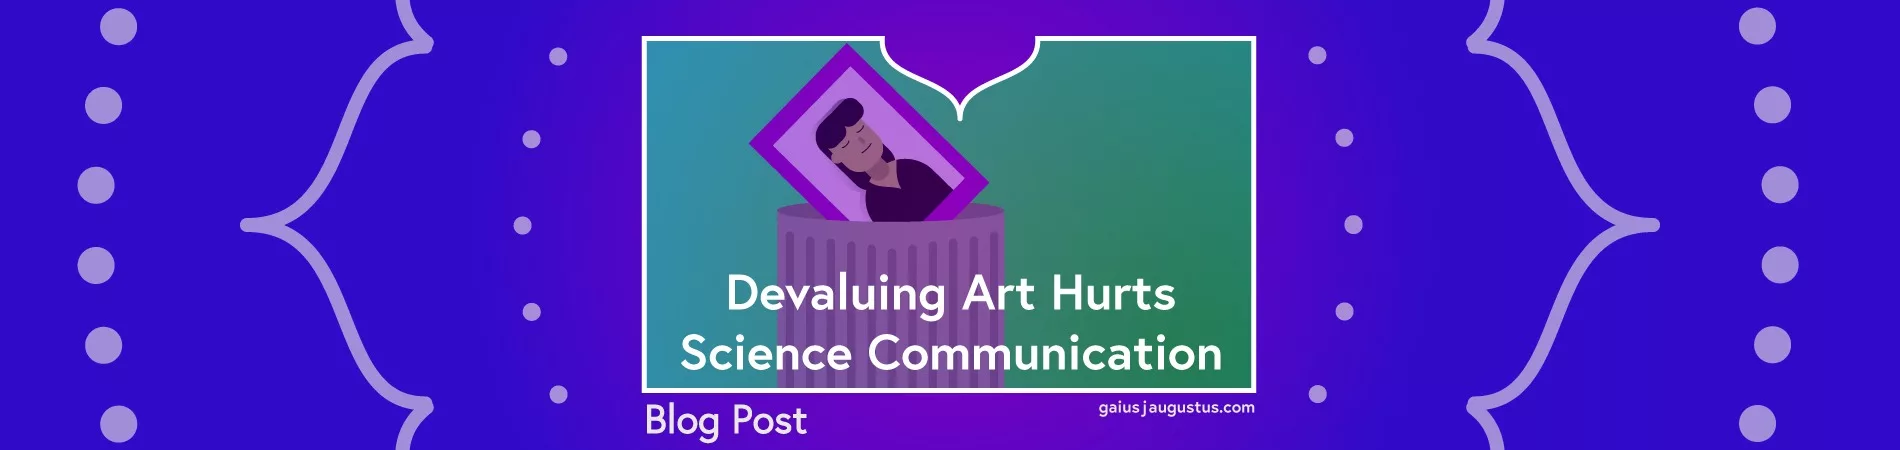 Devaluing art hurts science communication